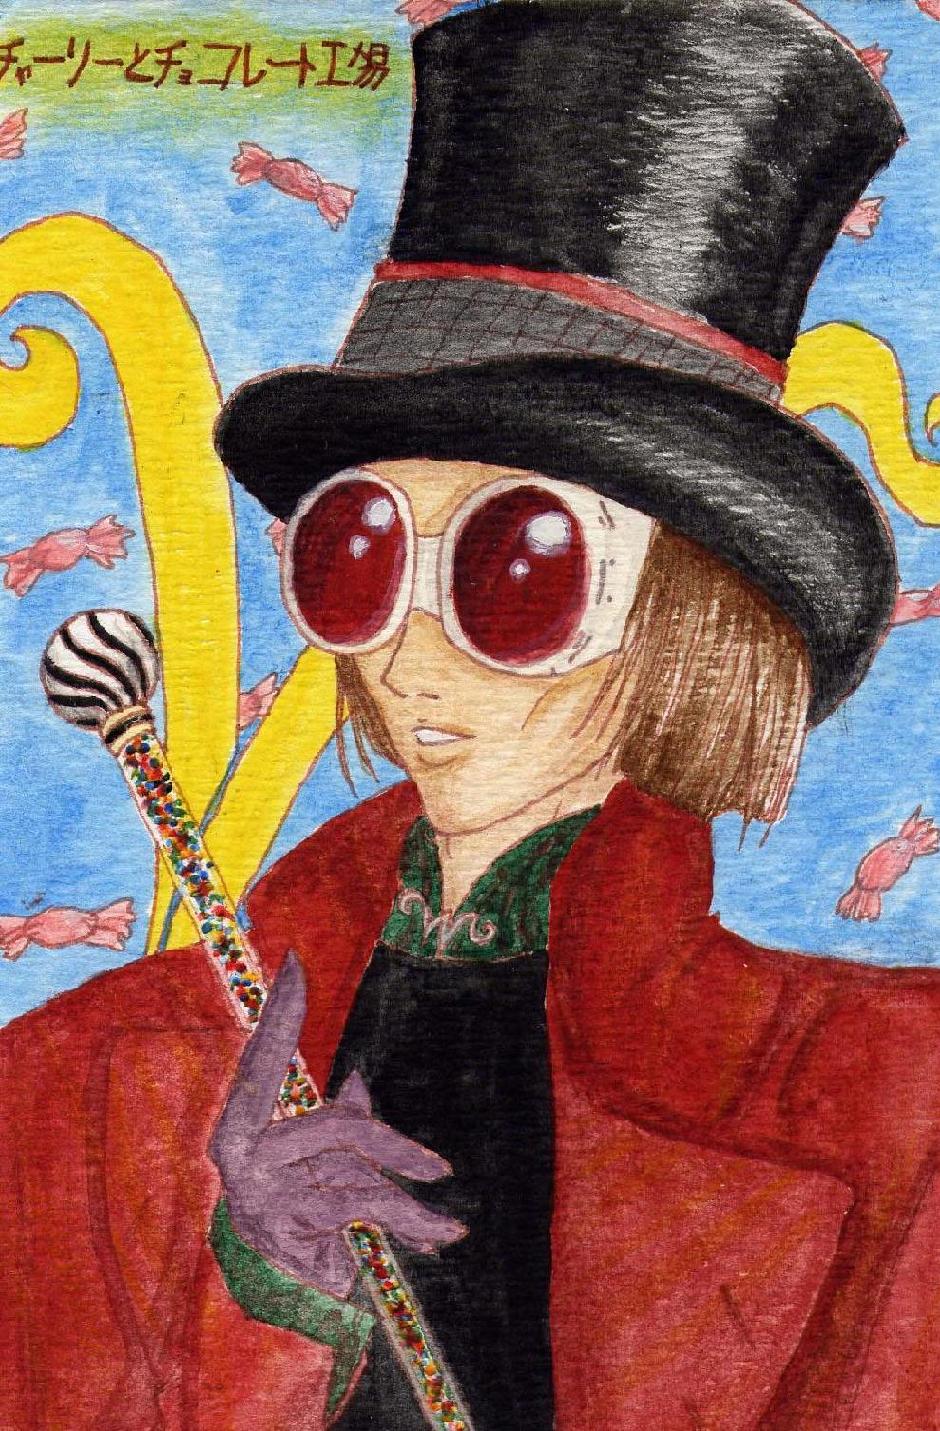 Wonka on a Postcard by otaku_hobbit27